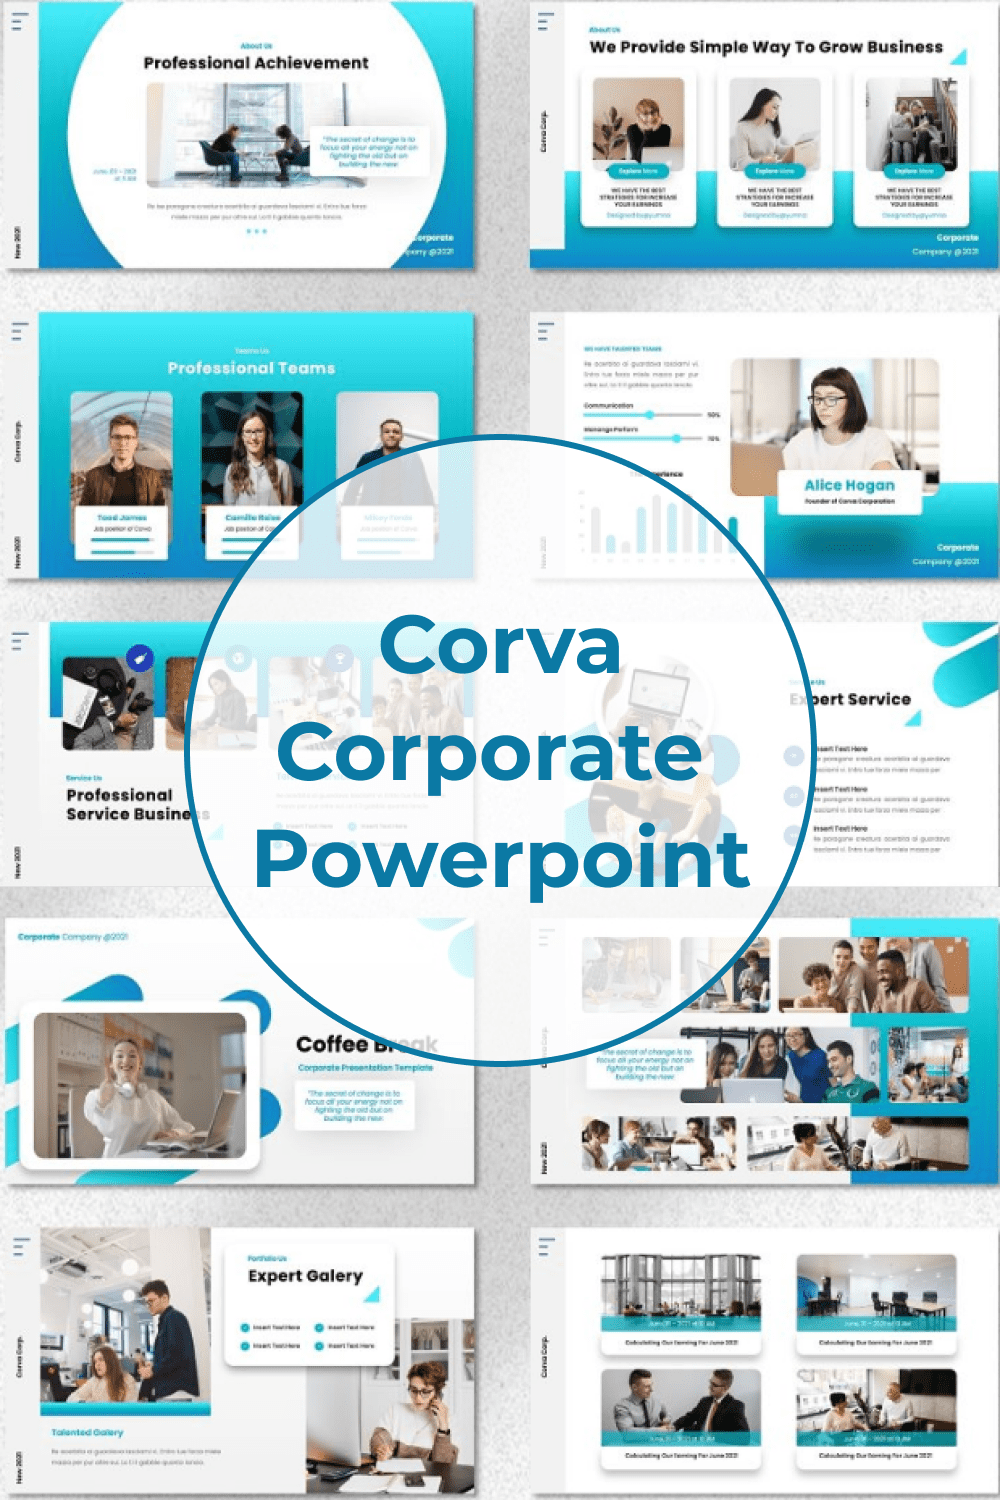 Corva - Corporate Powerpoint Pinterest.